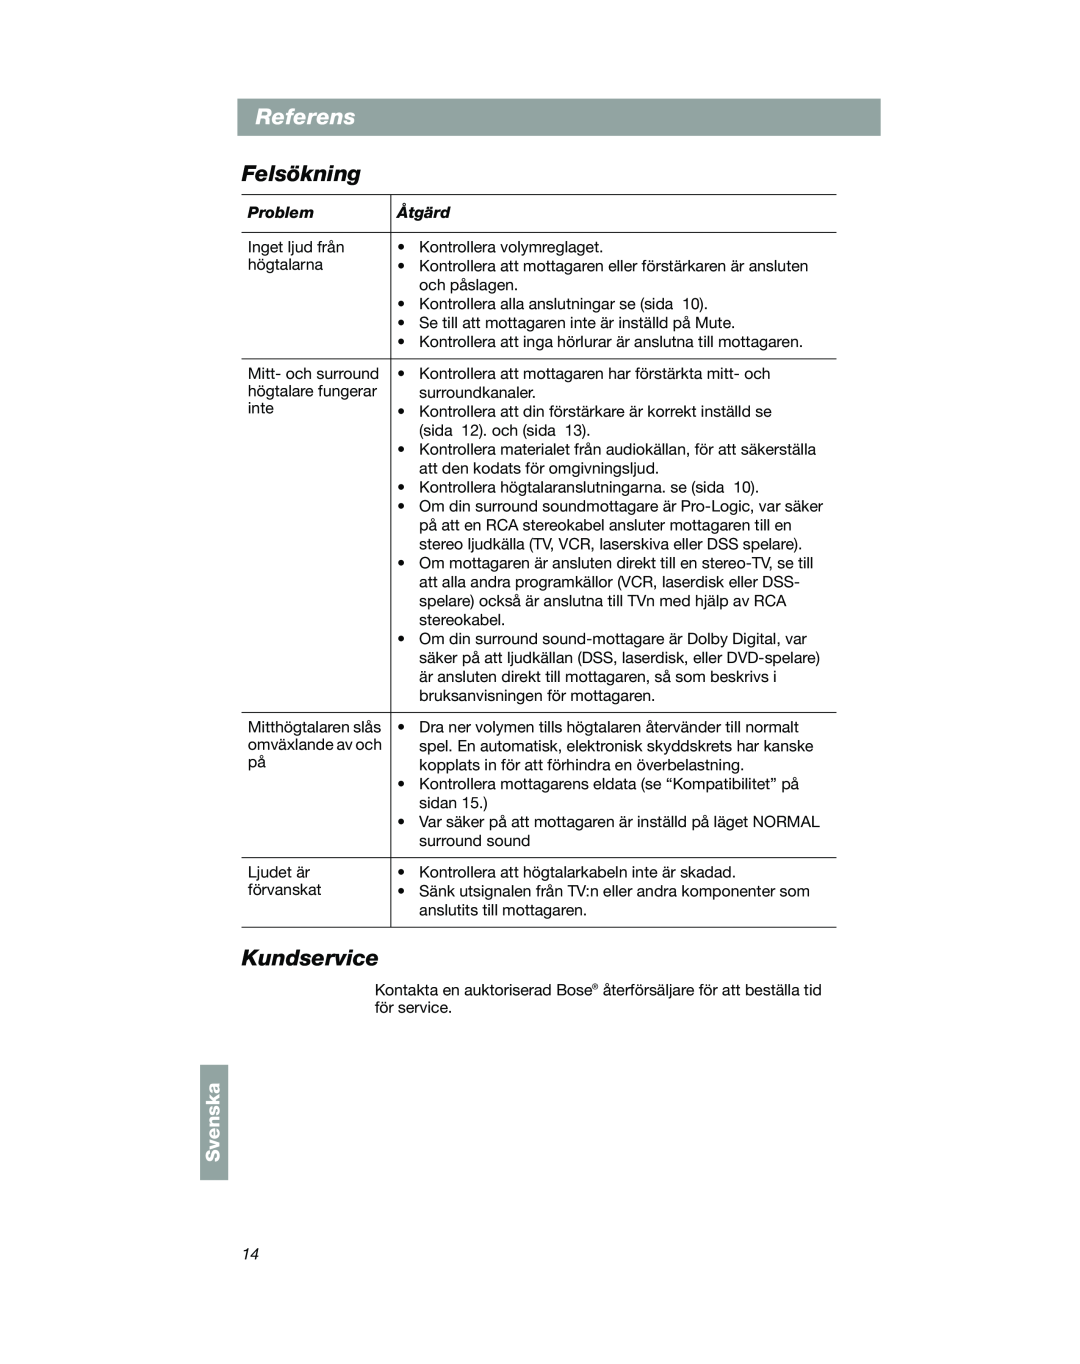 Bose VCS-10 manual Referens, Felsökning, Kundservice, Svenska 